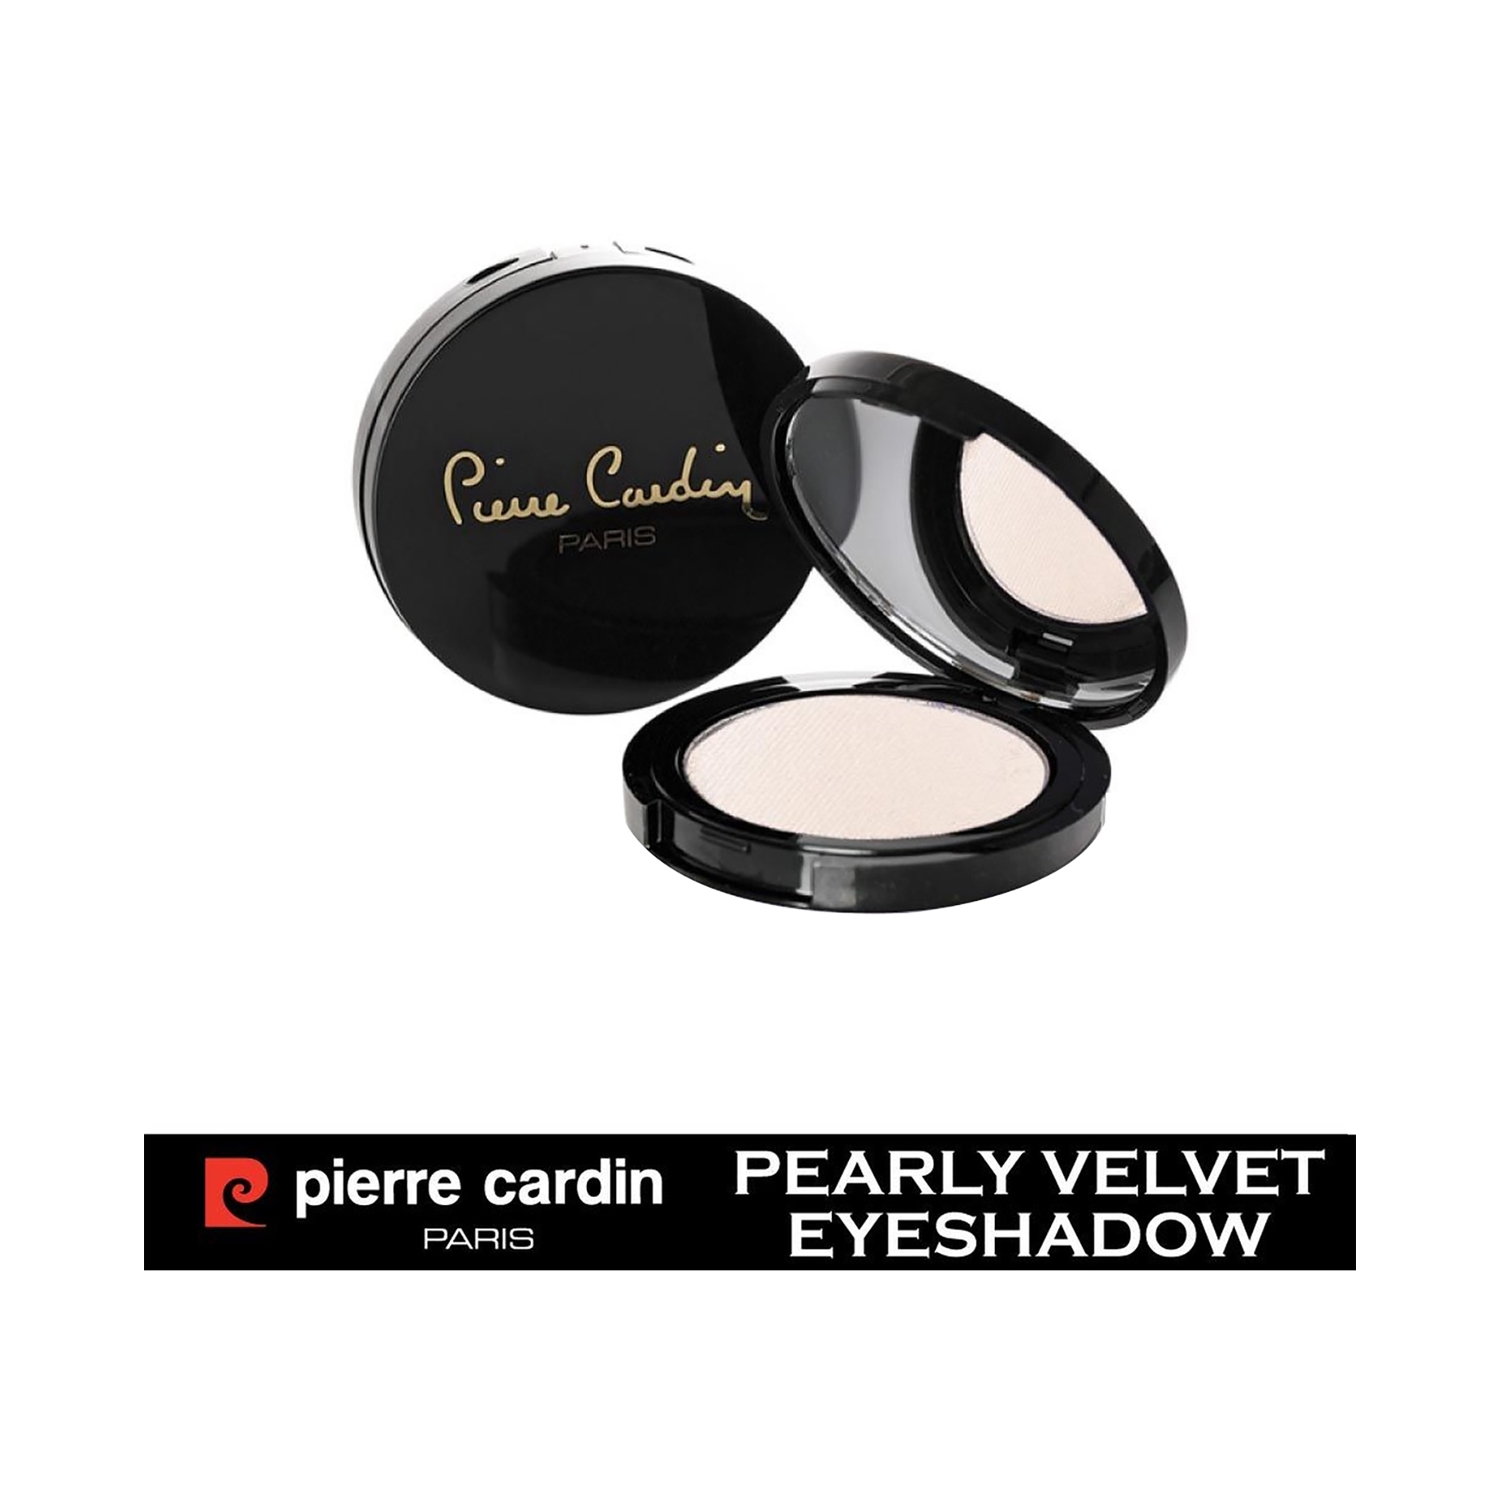 Pierre Cardin Paris | Pierre Cardin Paris Pearly Velvet Eye Shadow - 175 French Vanilla (4g)